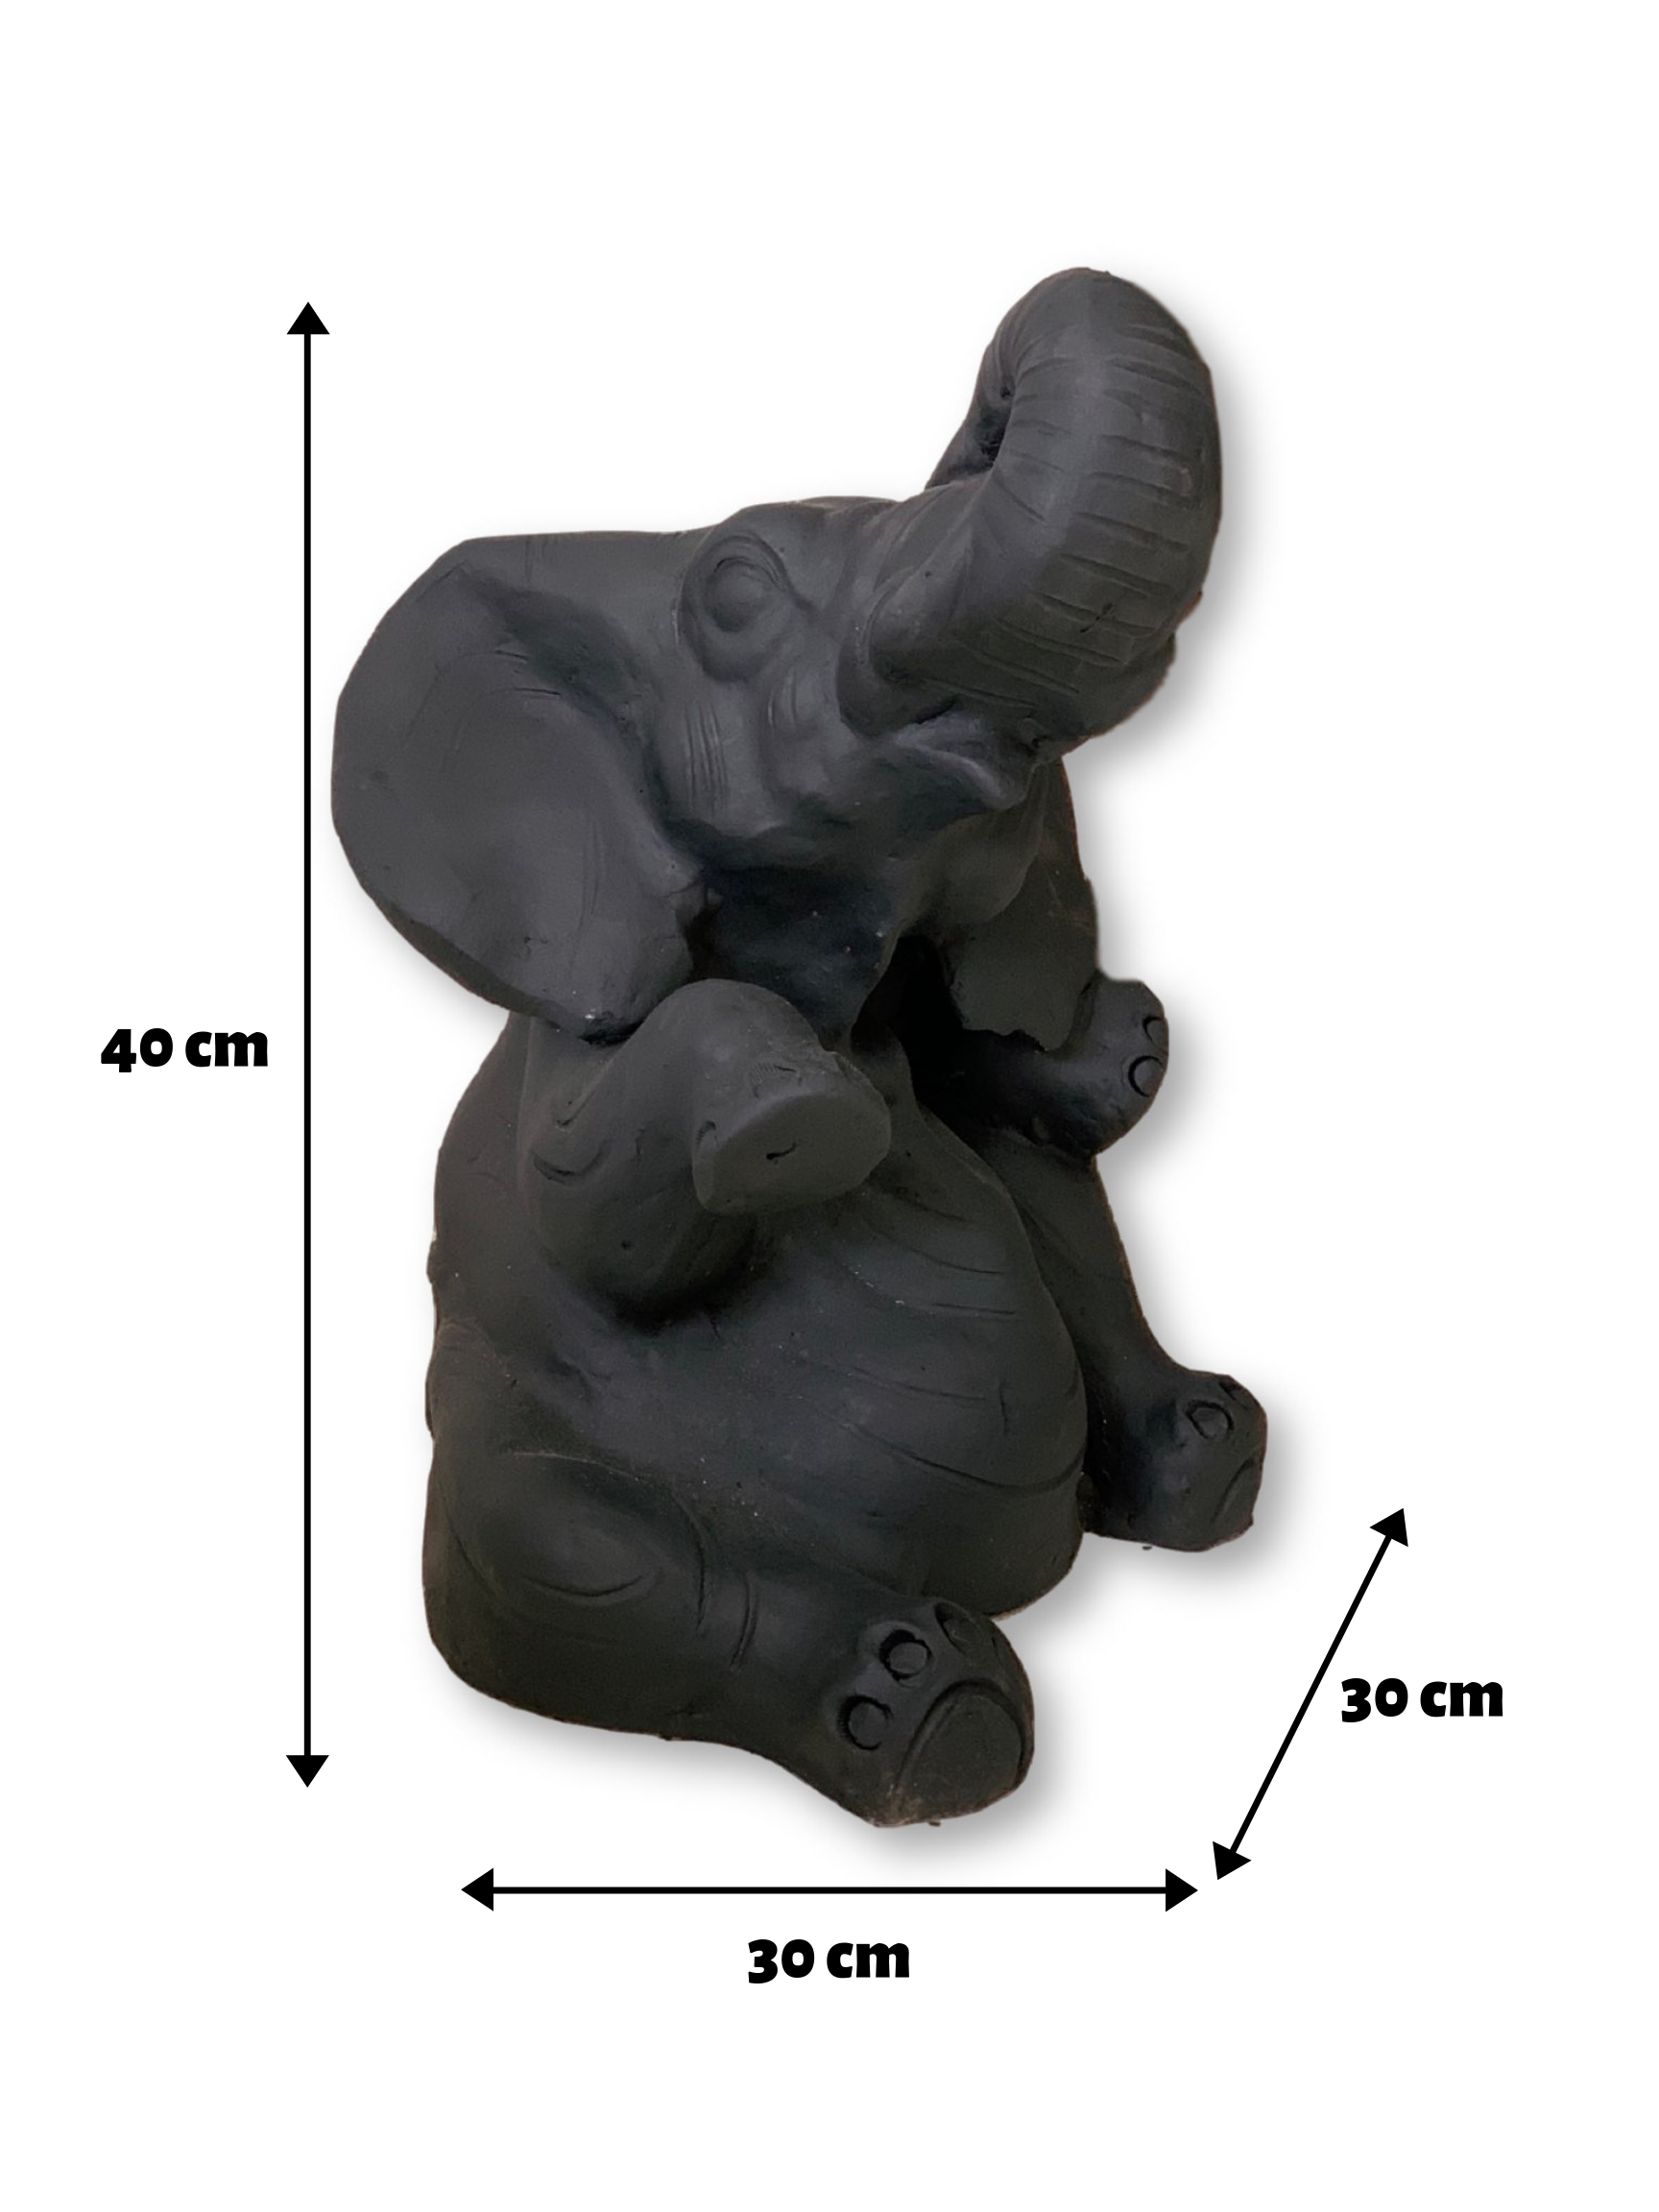 Black Elephant Statue